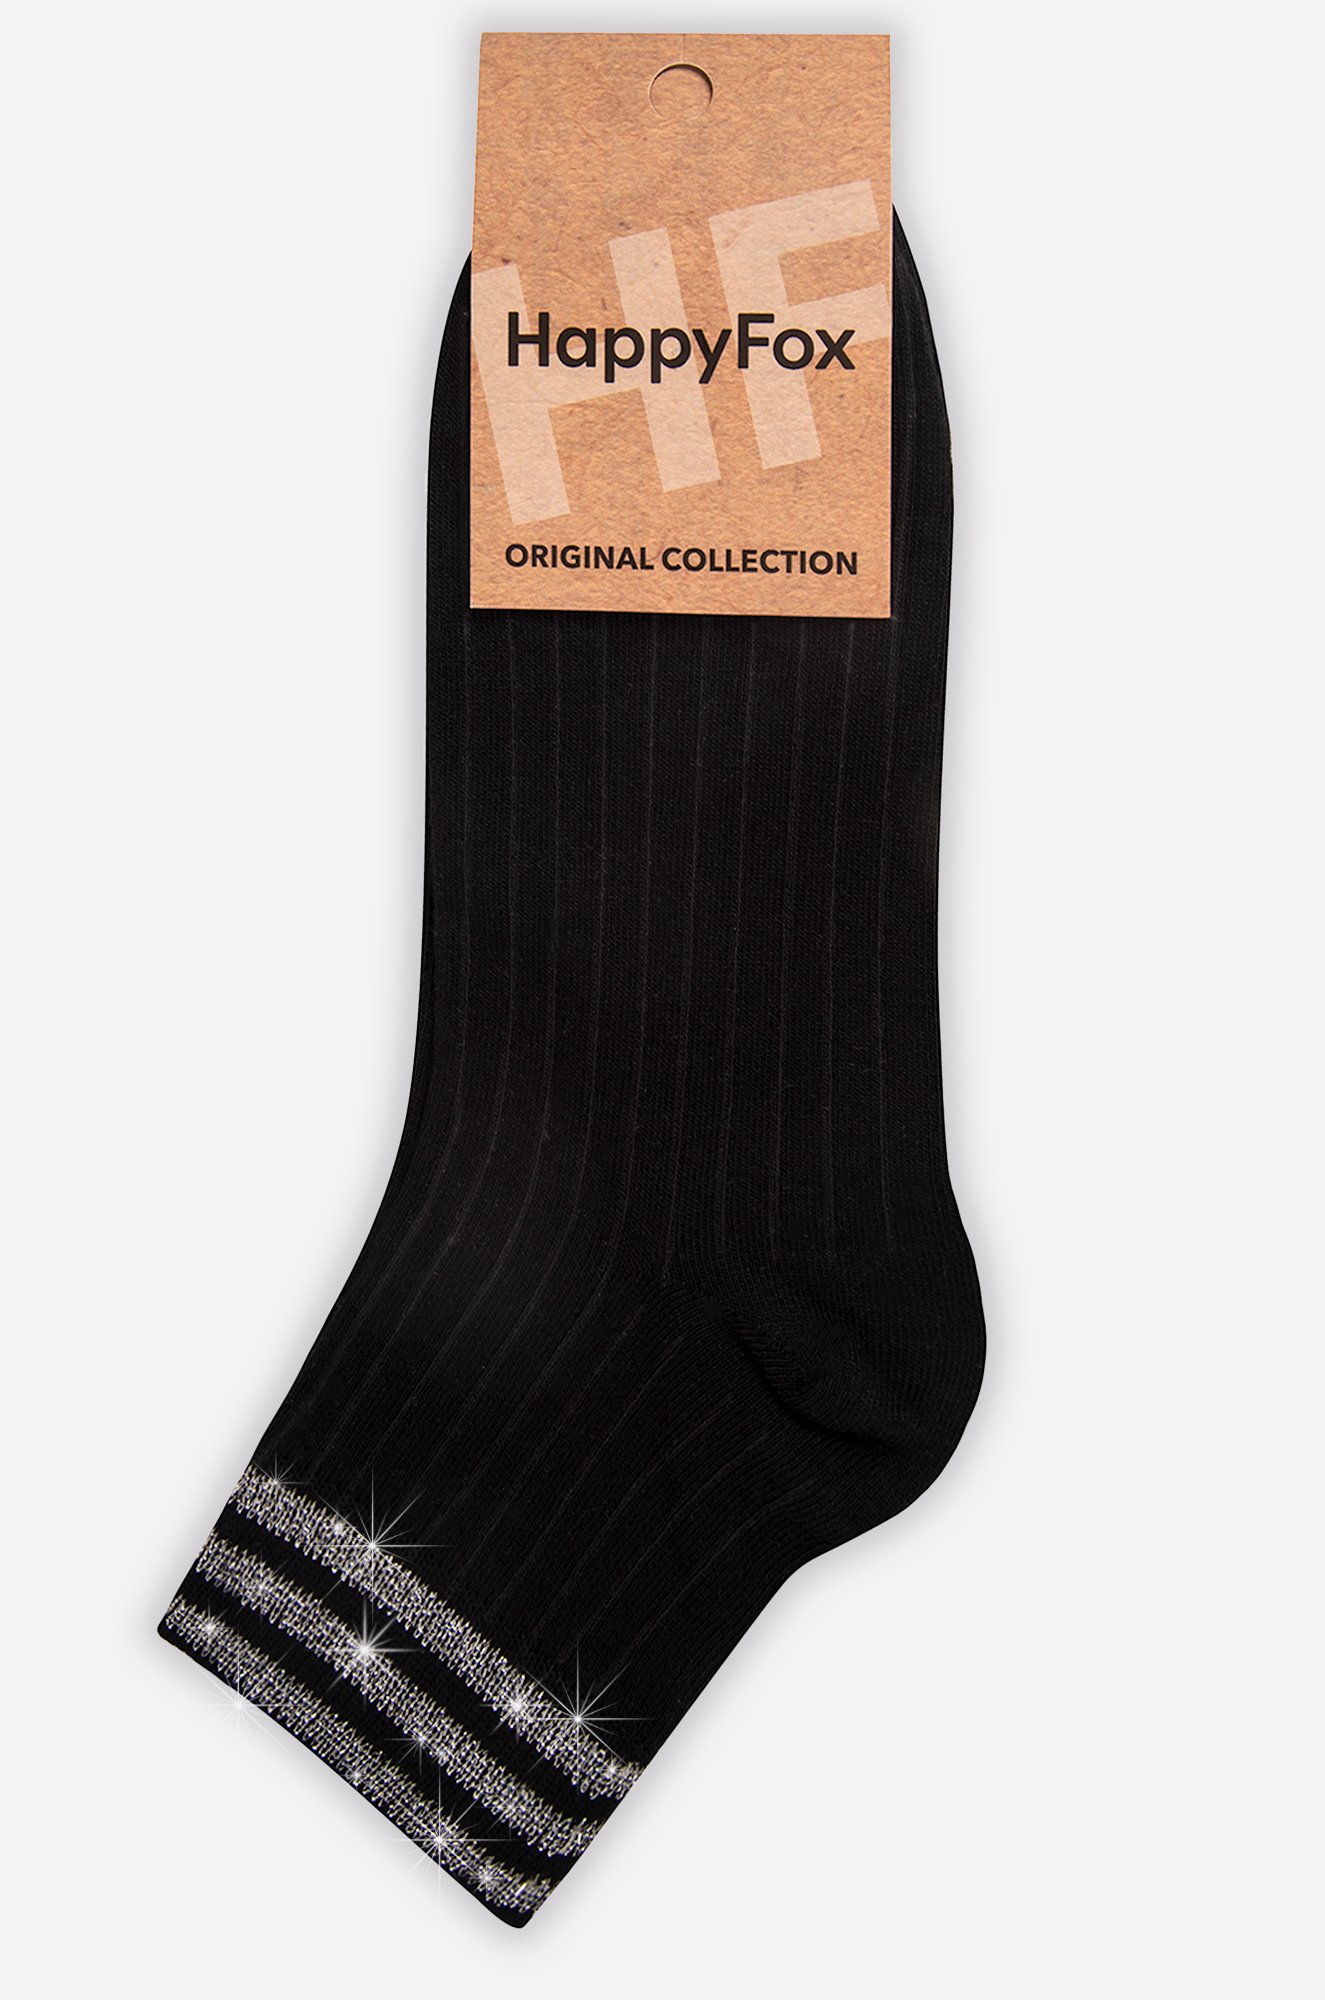 Женские носки с люрексом Happy Fox